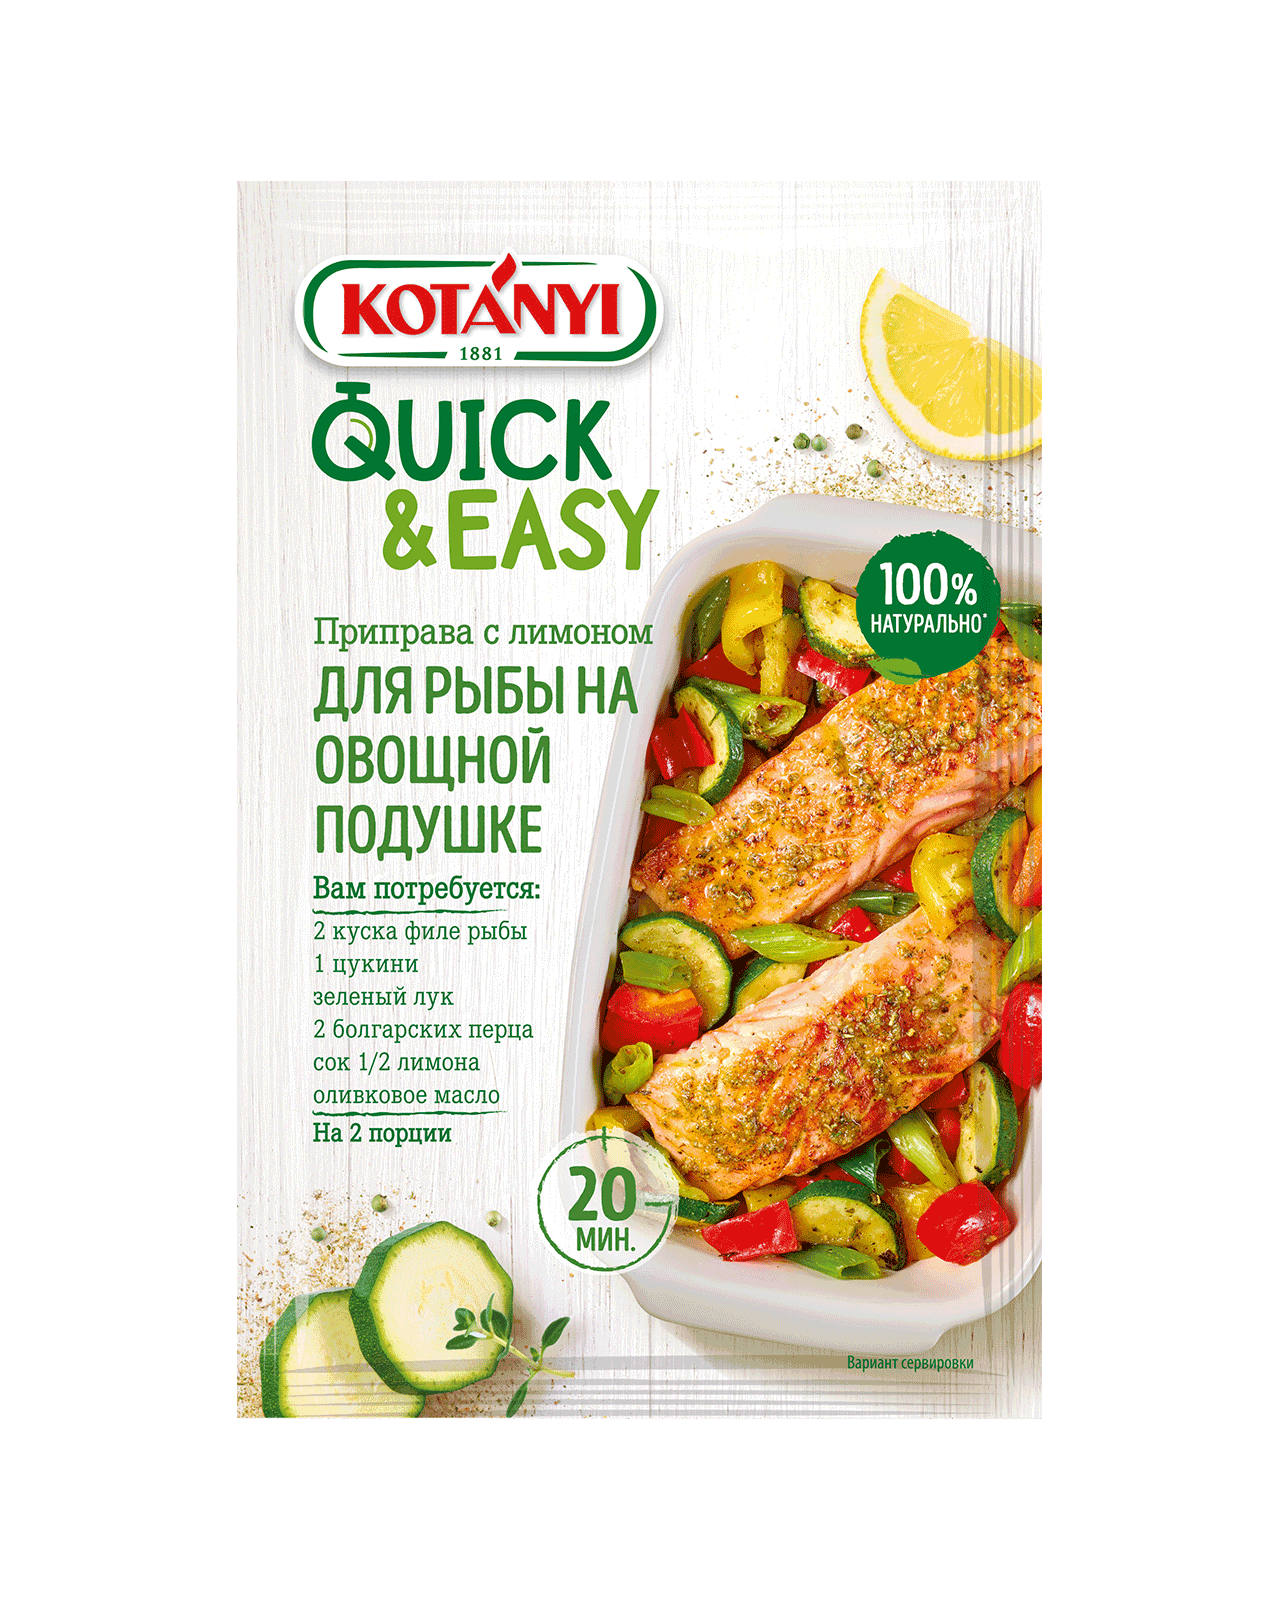 9001414435977 359711 Kotányi Quick&easy Salmon With Vegetables Ru Pouch Vs